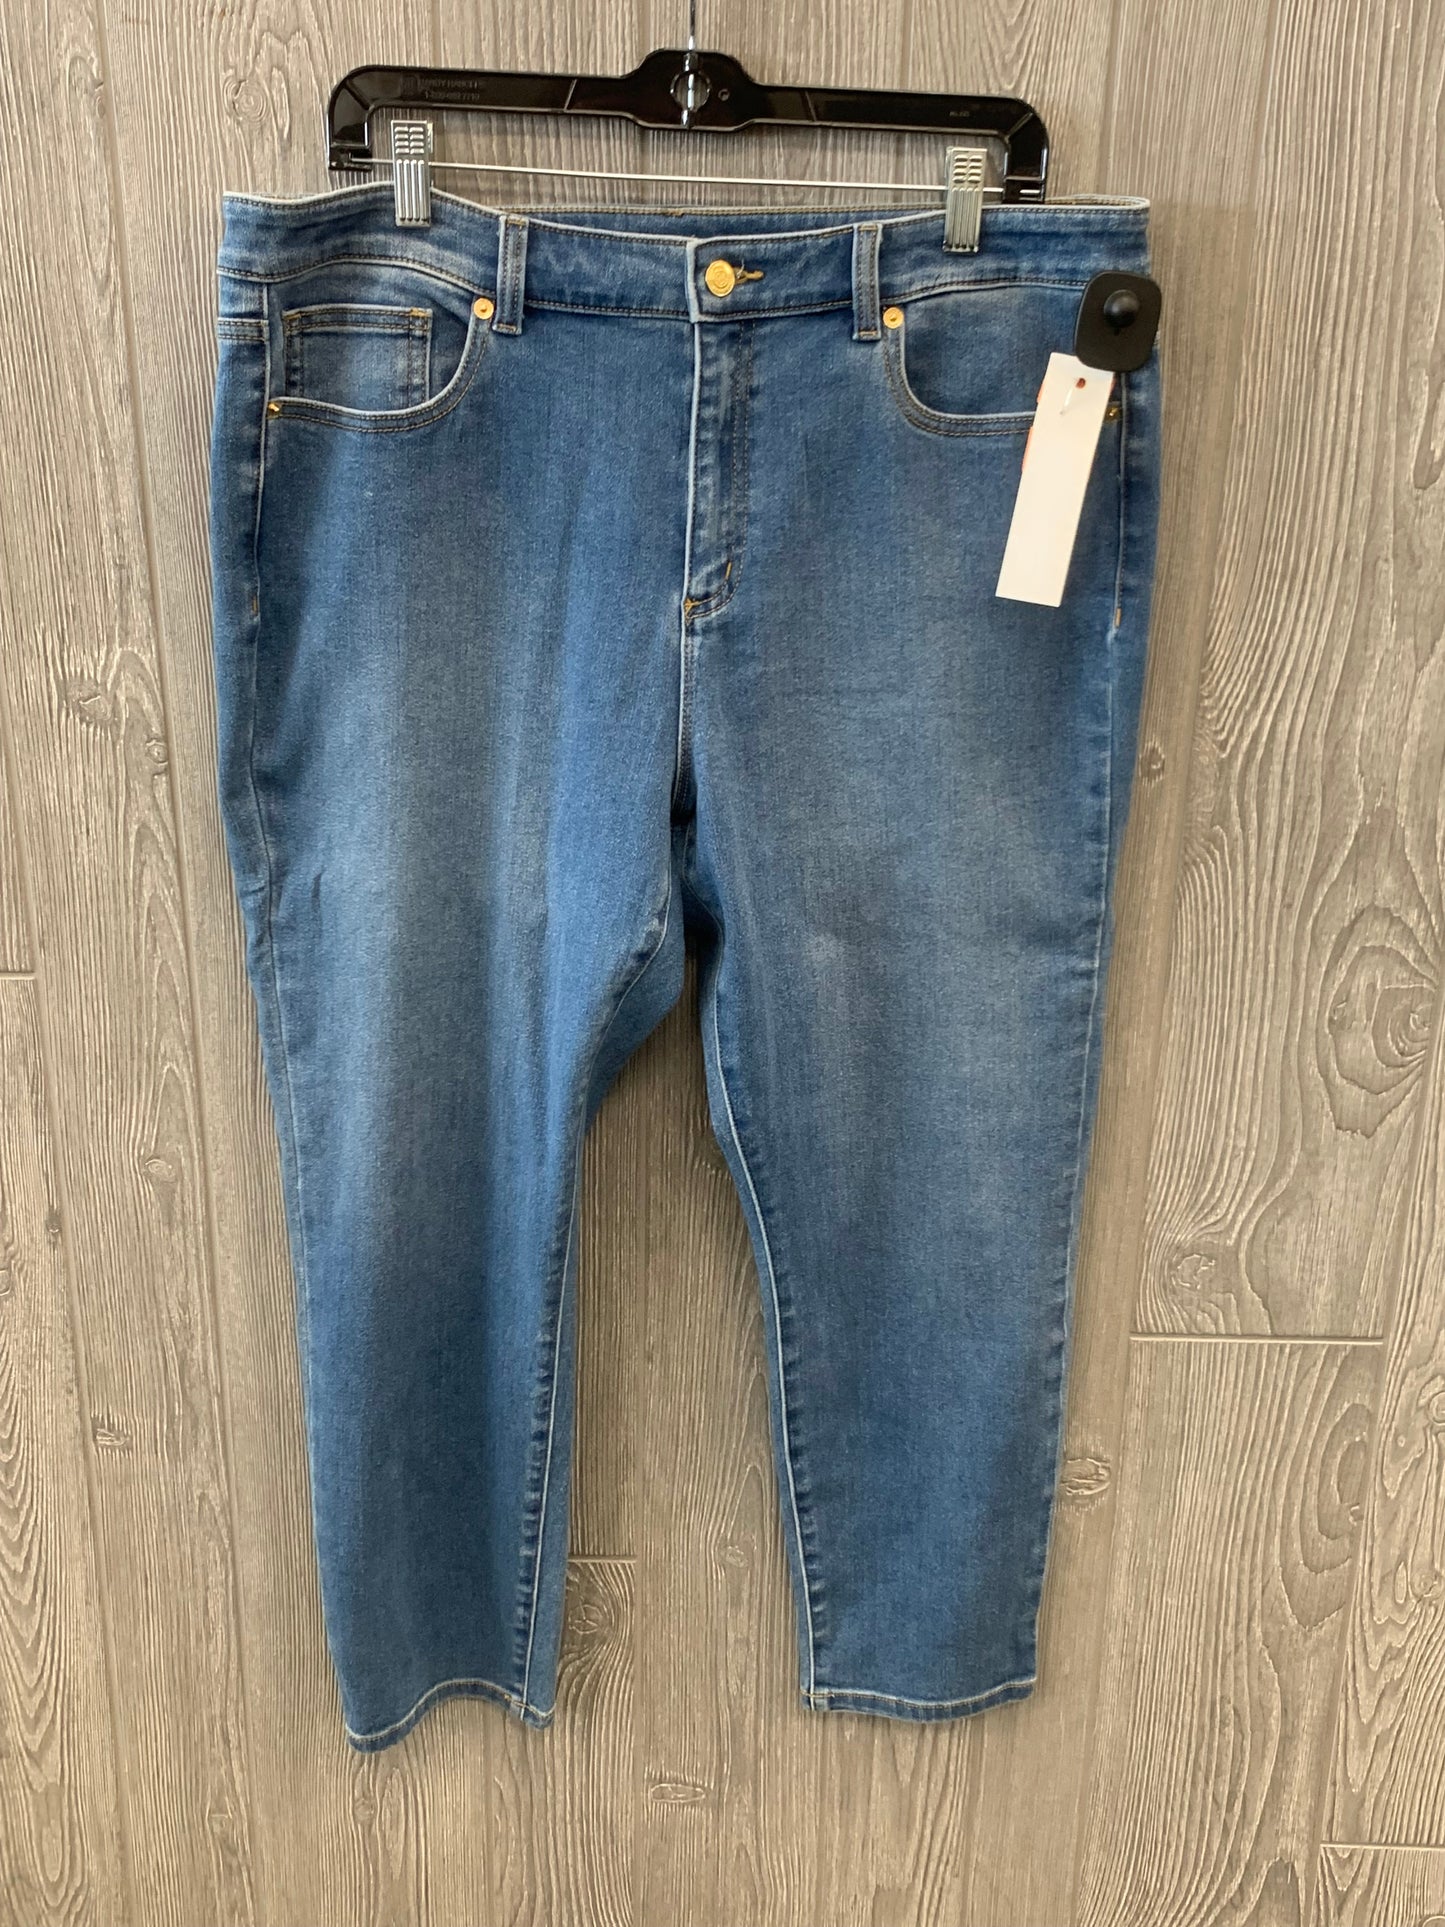 Jeans Designer By Michael Kors  Size: 14